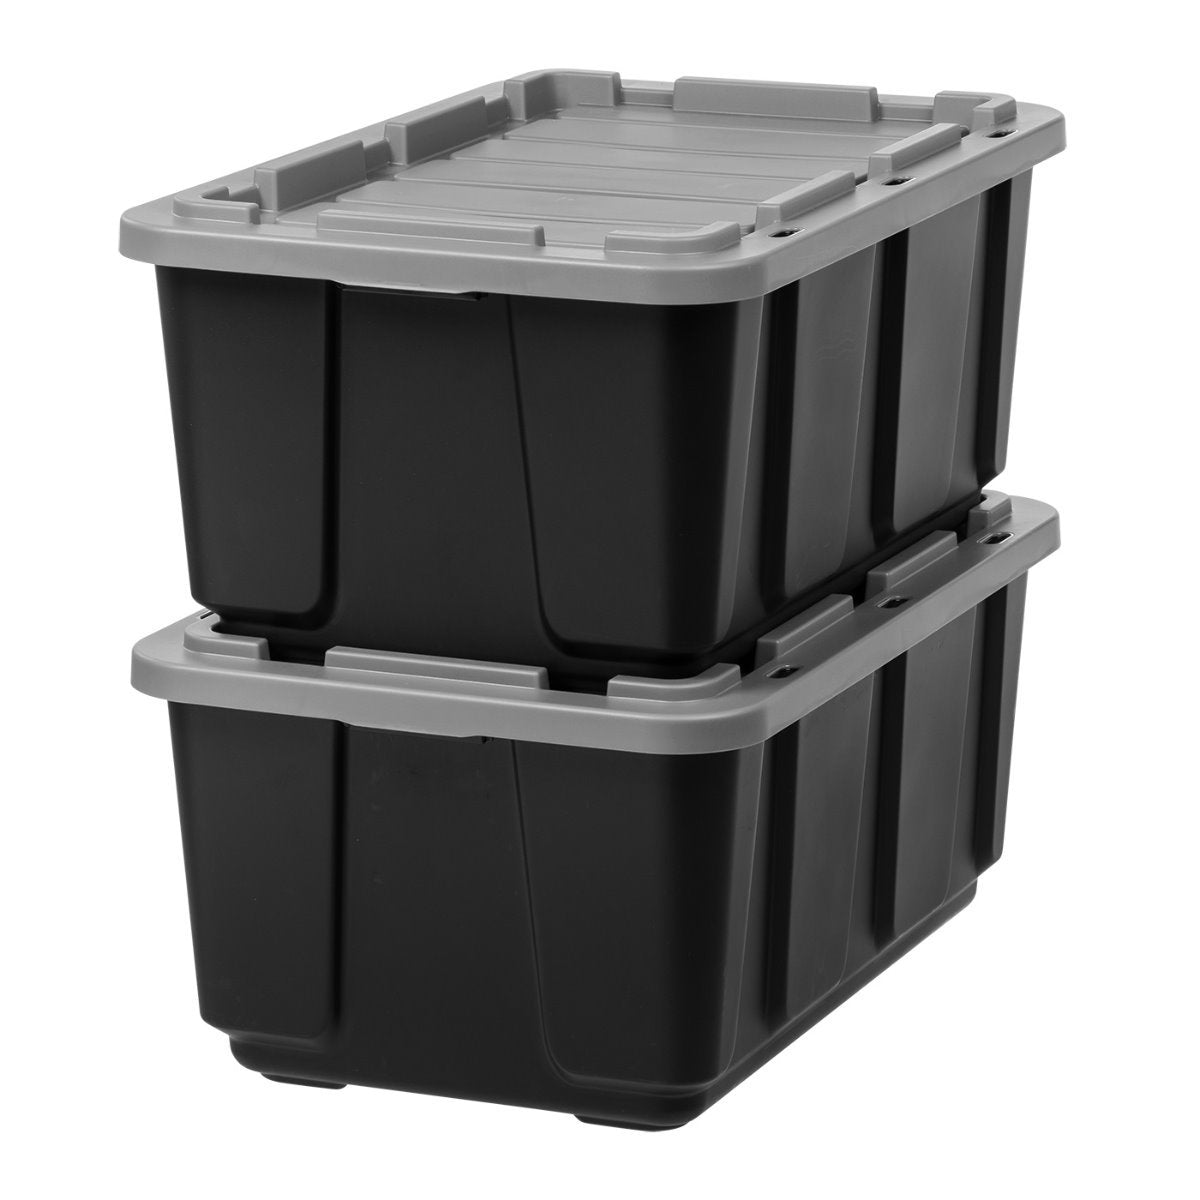 Hyper Tough - 27 Gallon Snap Lid Plastic Storage Tote Box, Black